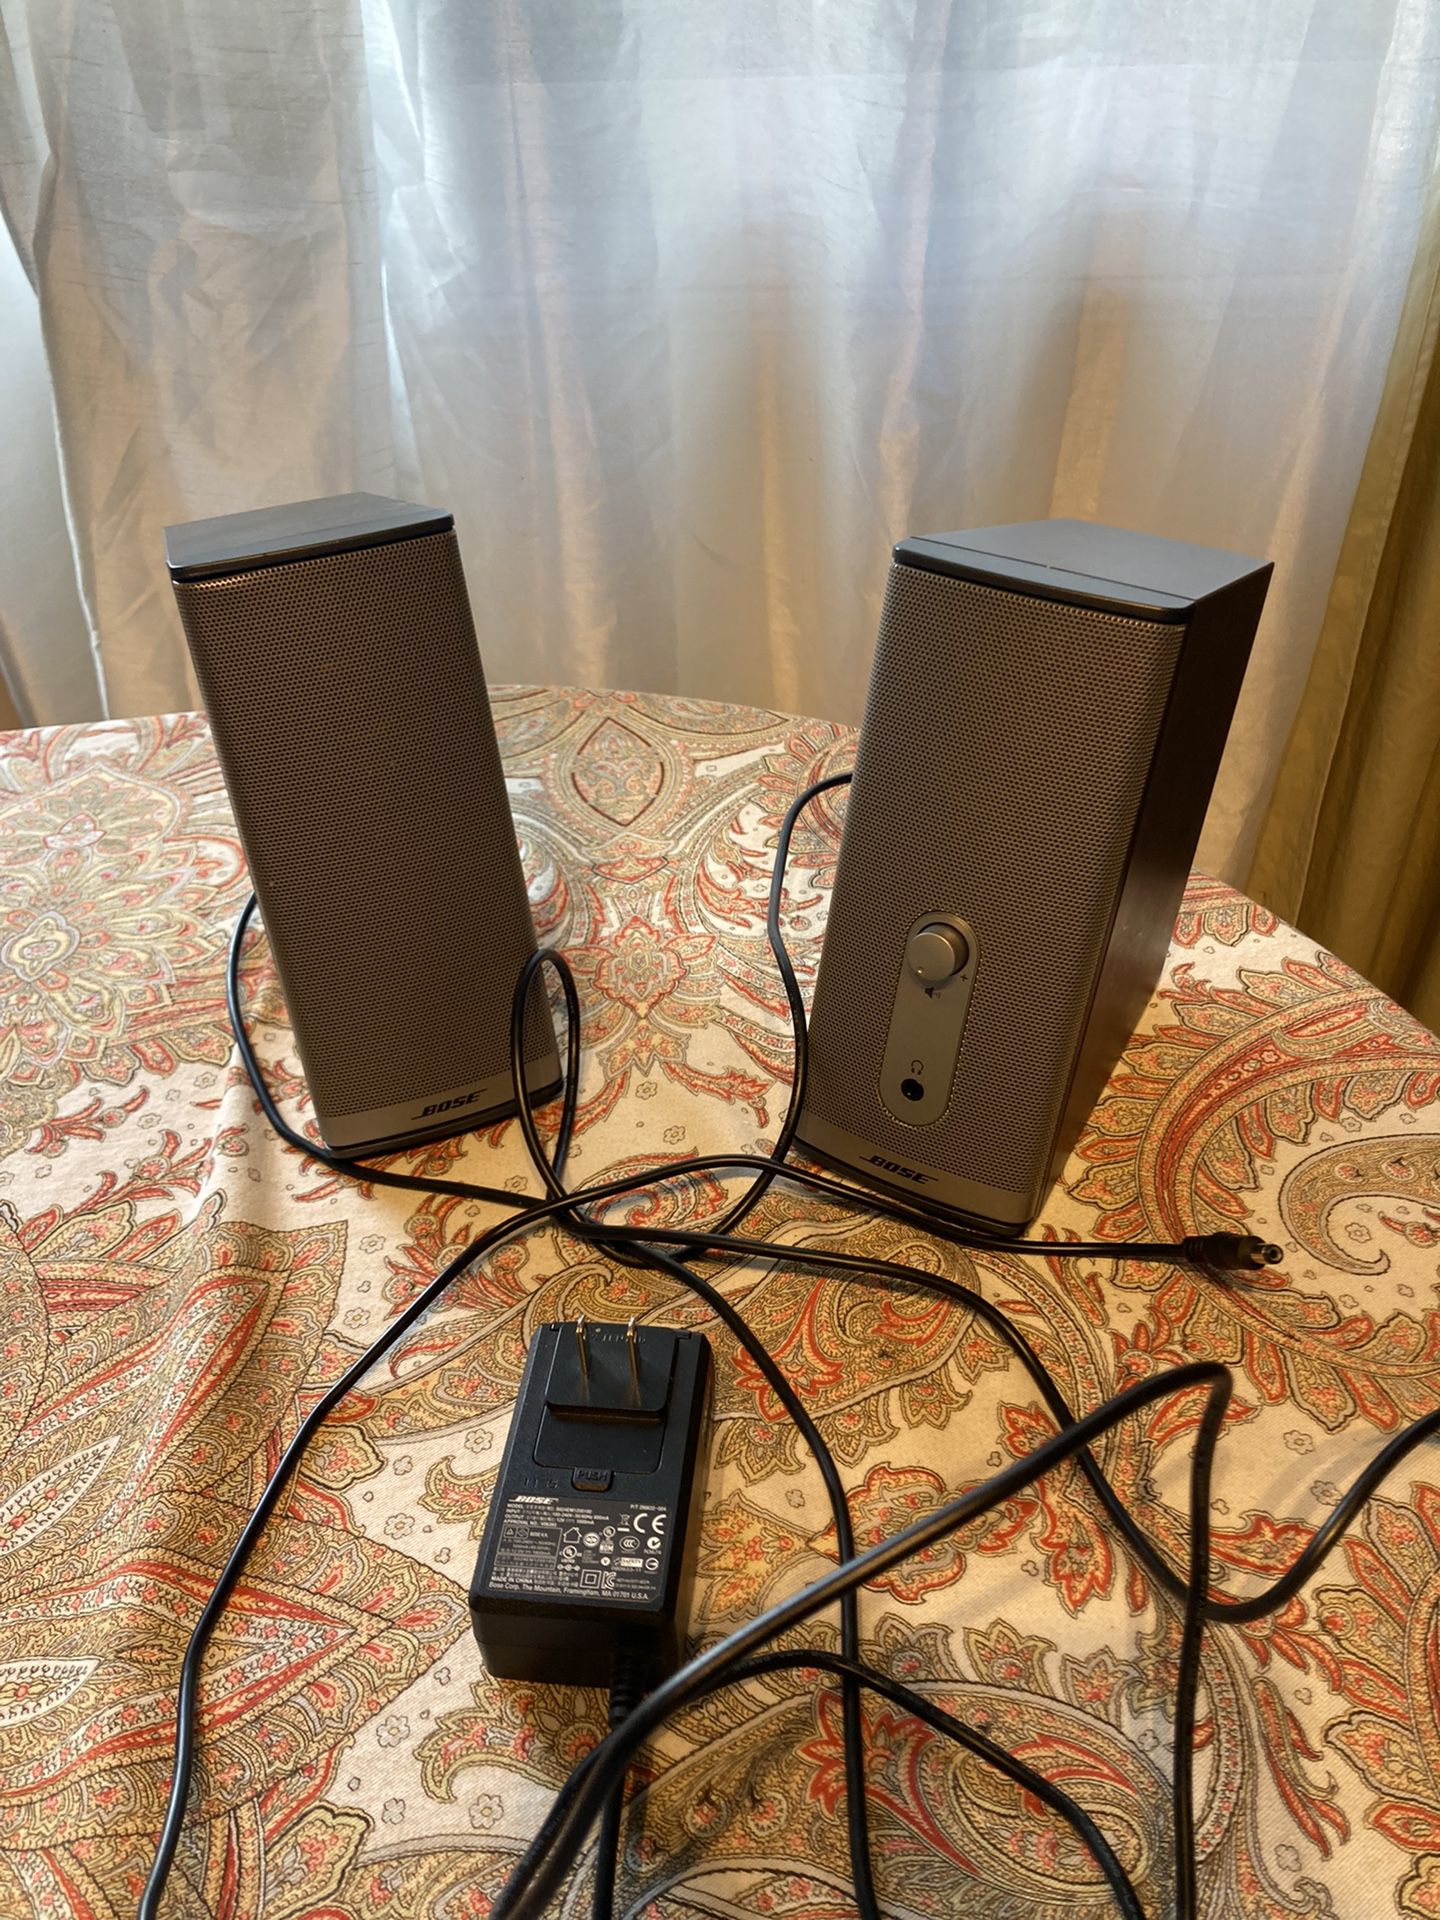 Bose Companion Speakers